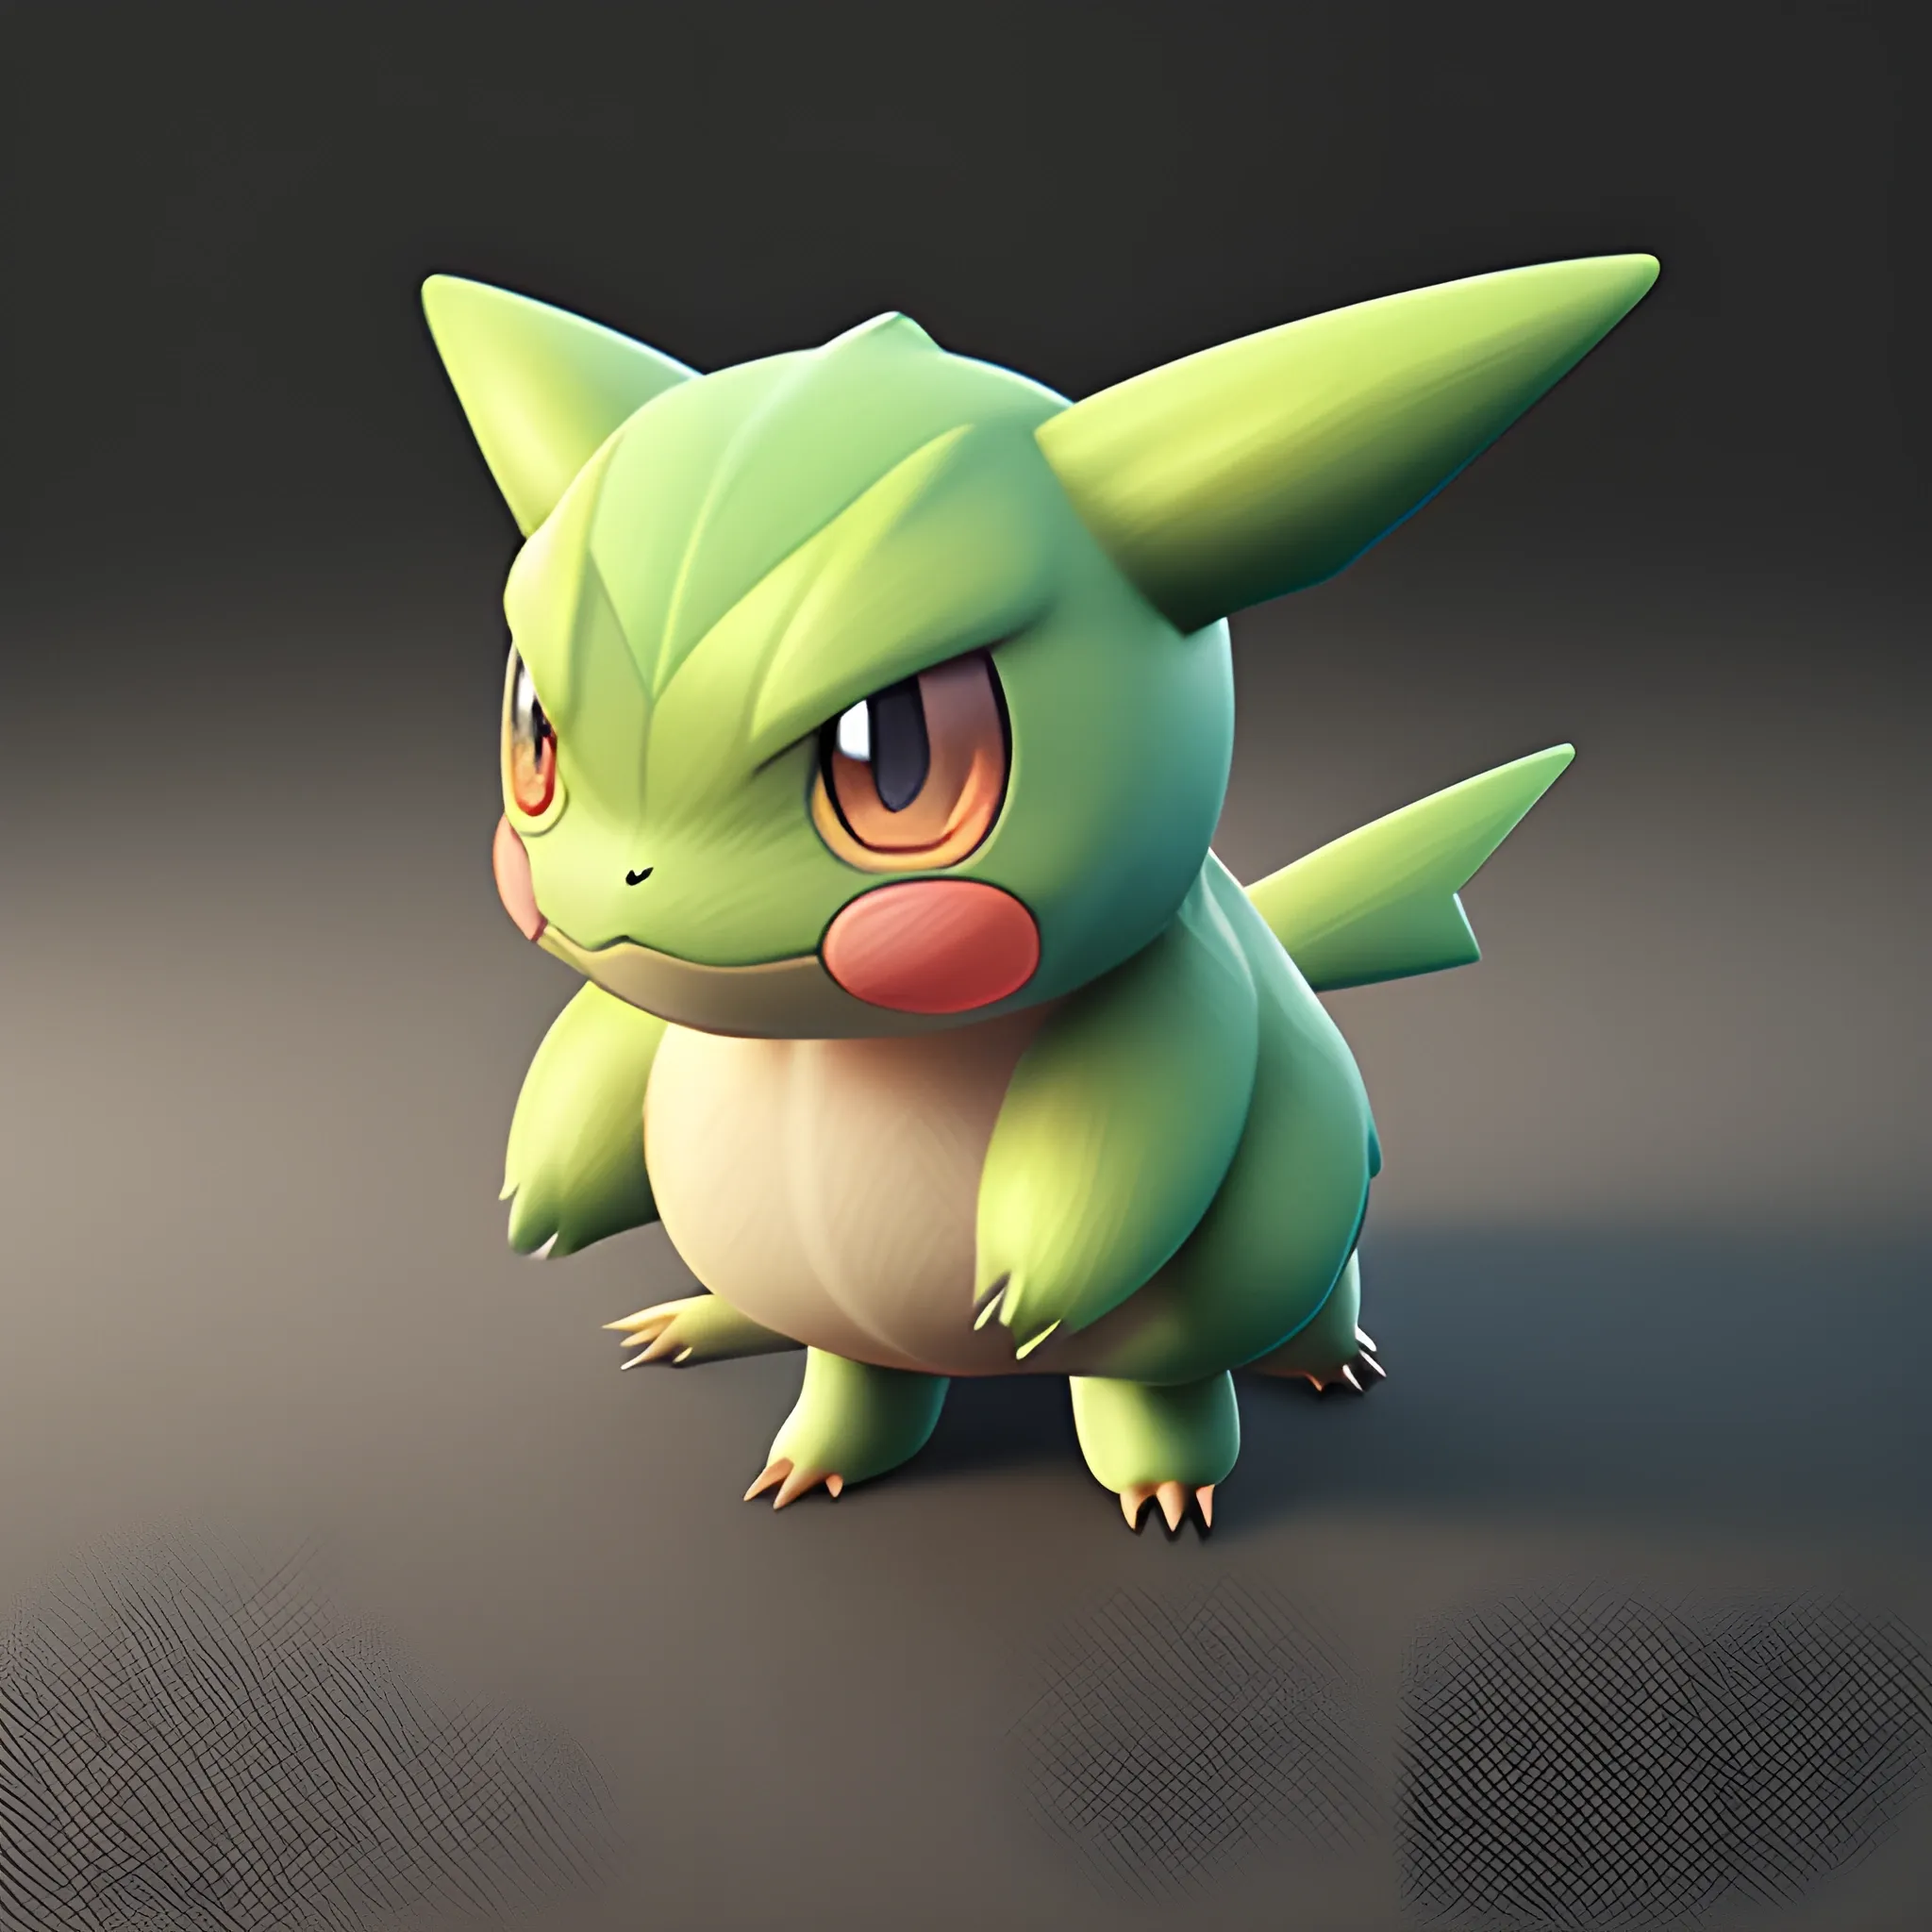 photorealistic Pokémon, photo, high detail, dramatic lighting, 3D